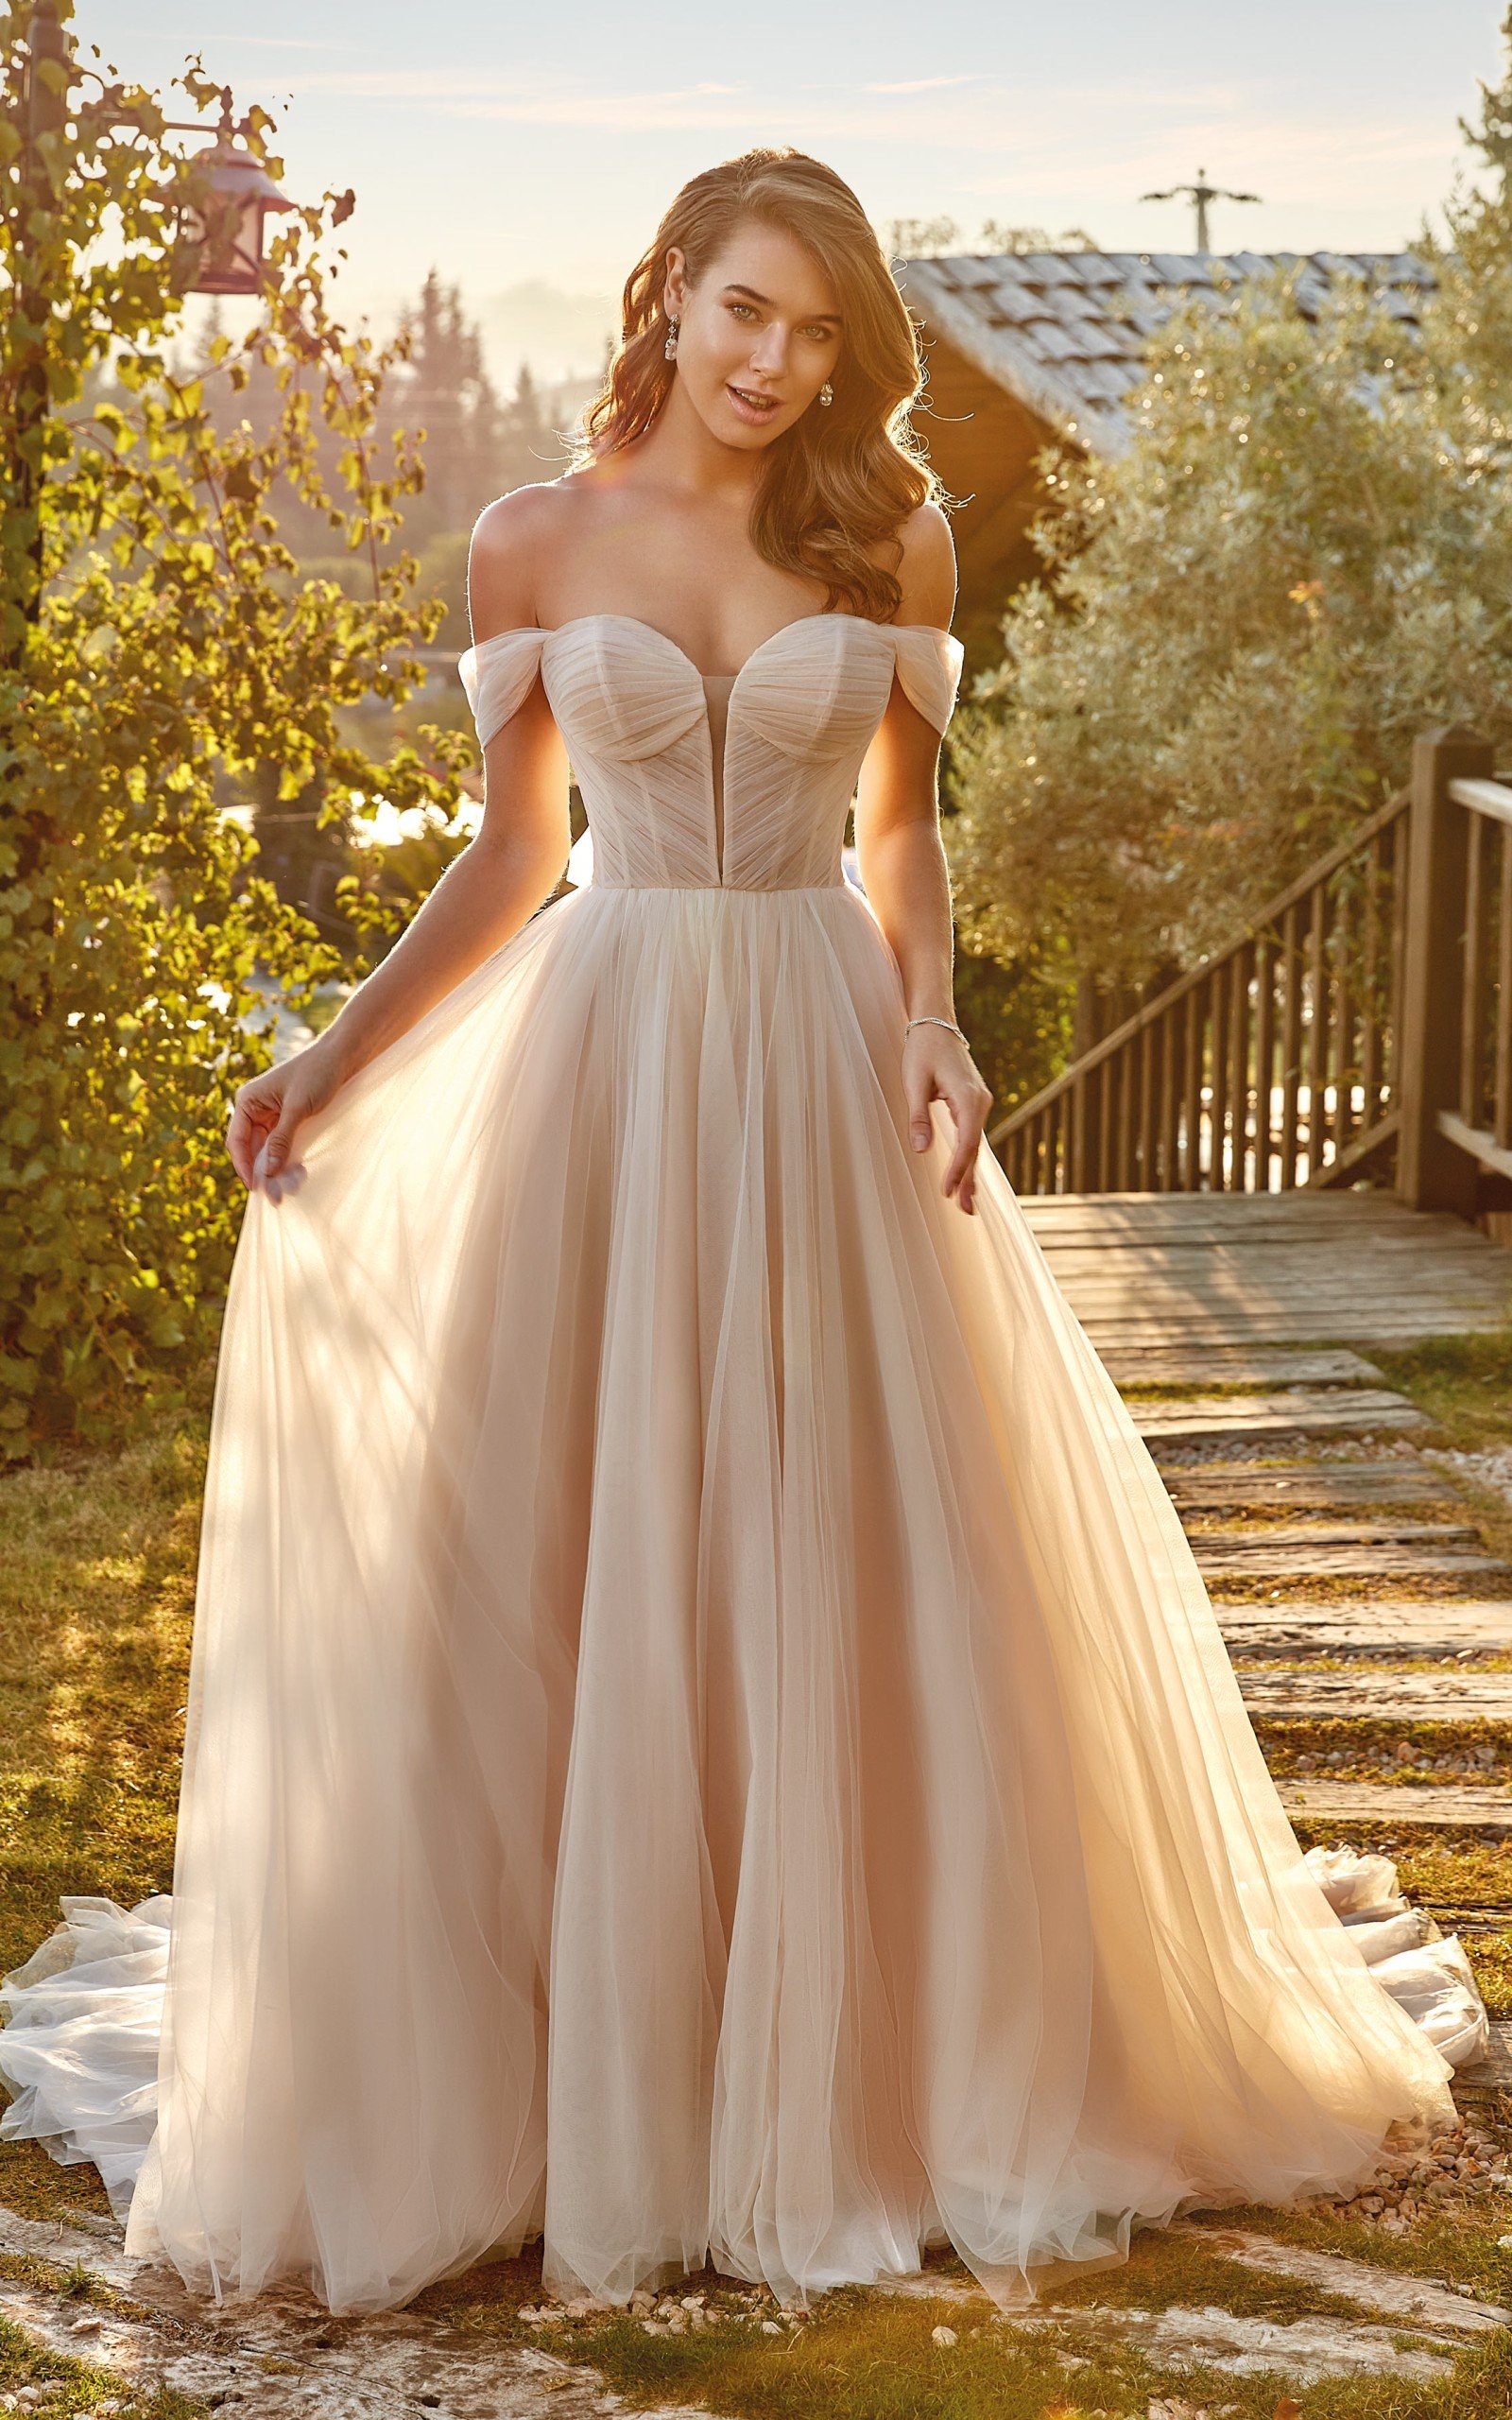 The Wedding Dress Barn Kingsclere - 01635 297763